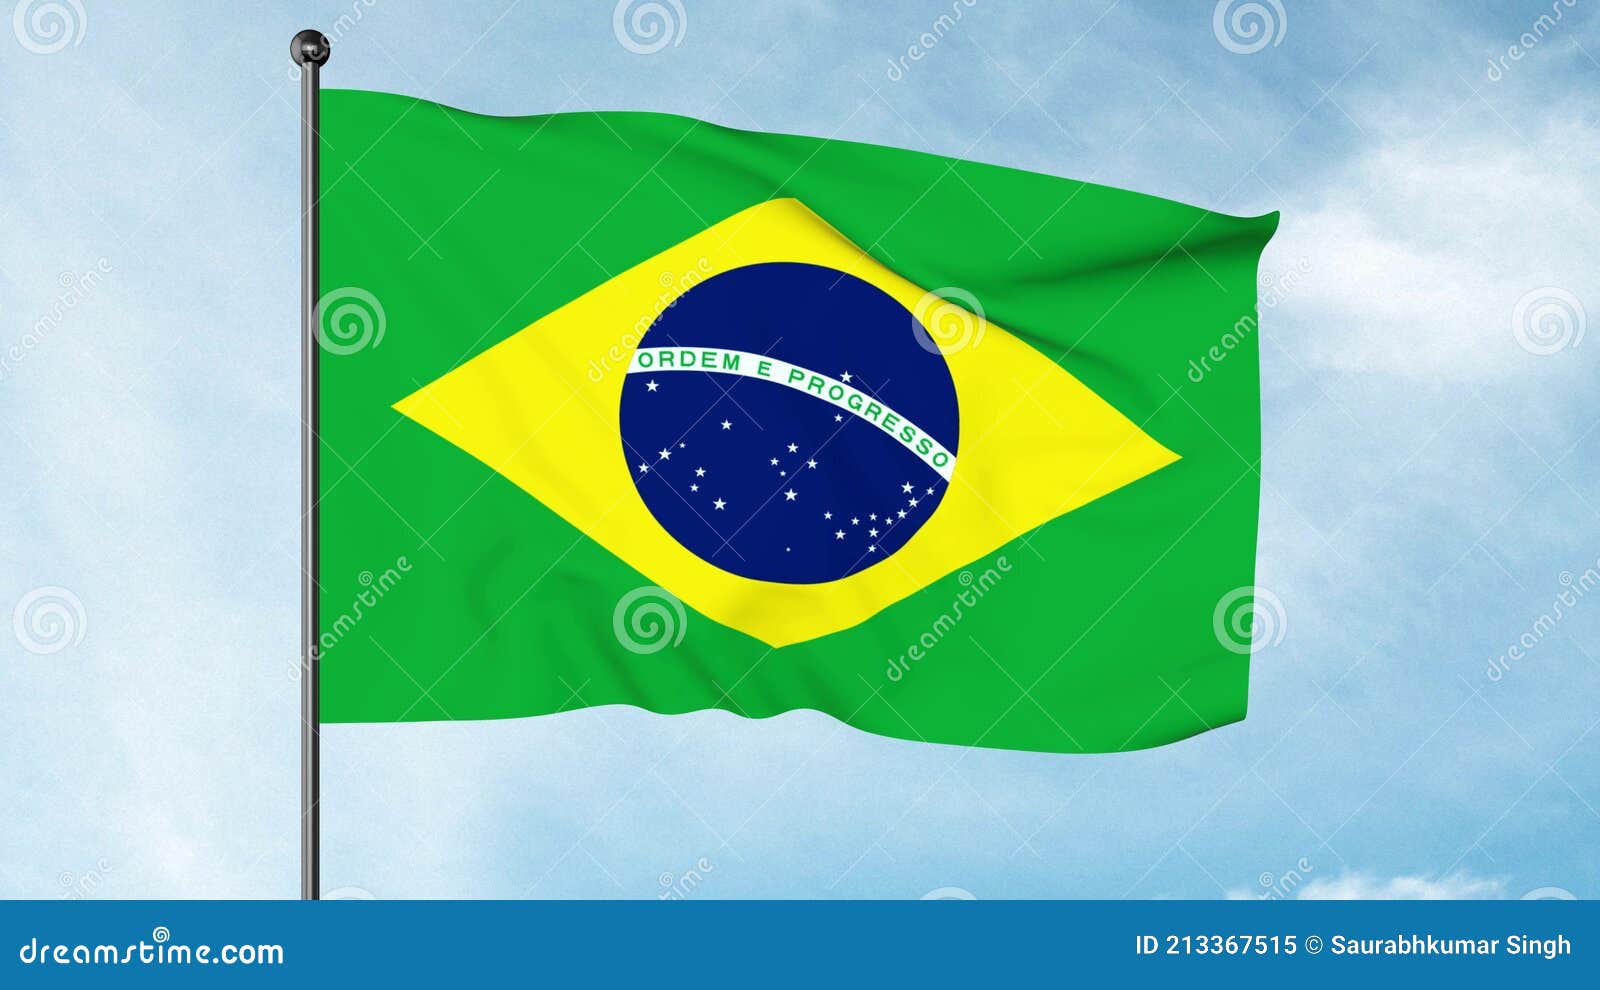 3d  of the flag of brazil, verde e amarela, auriverde, ordem e progresso